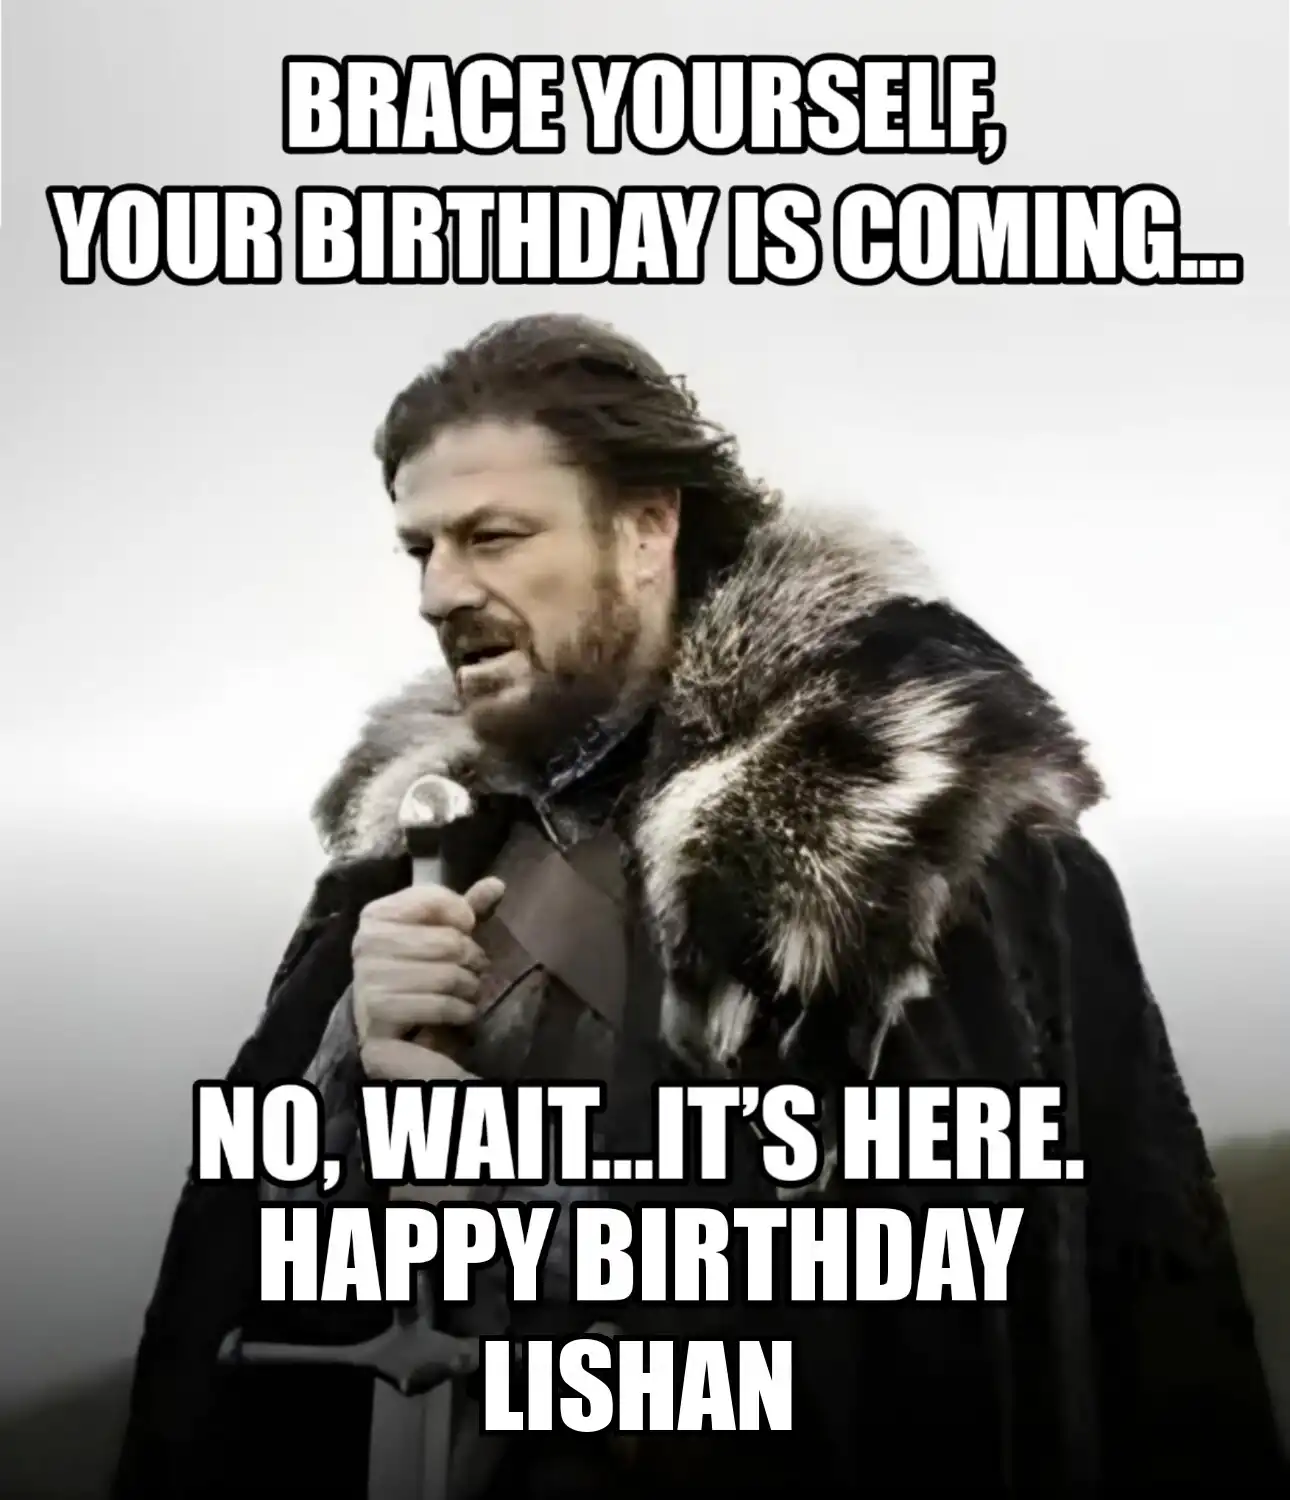 Happy Birthday Lishan Brace Yourself Your Birthday Is Coming Meme